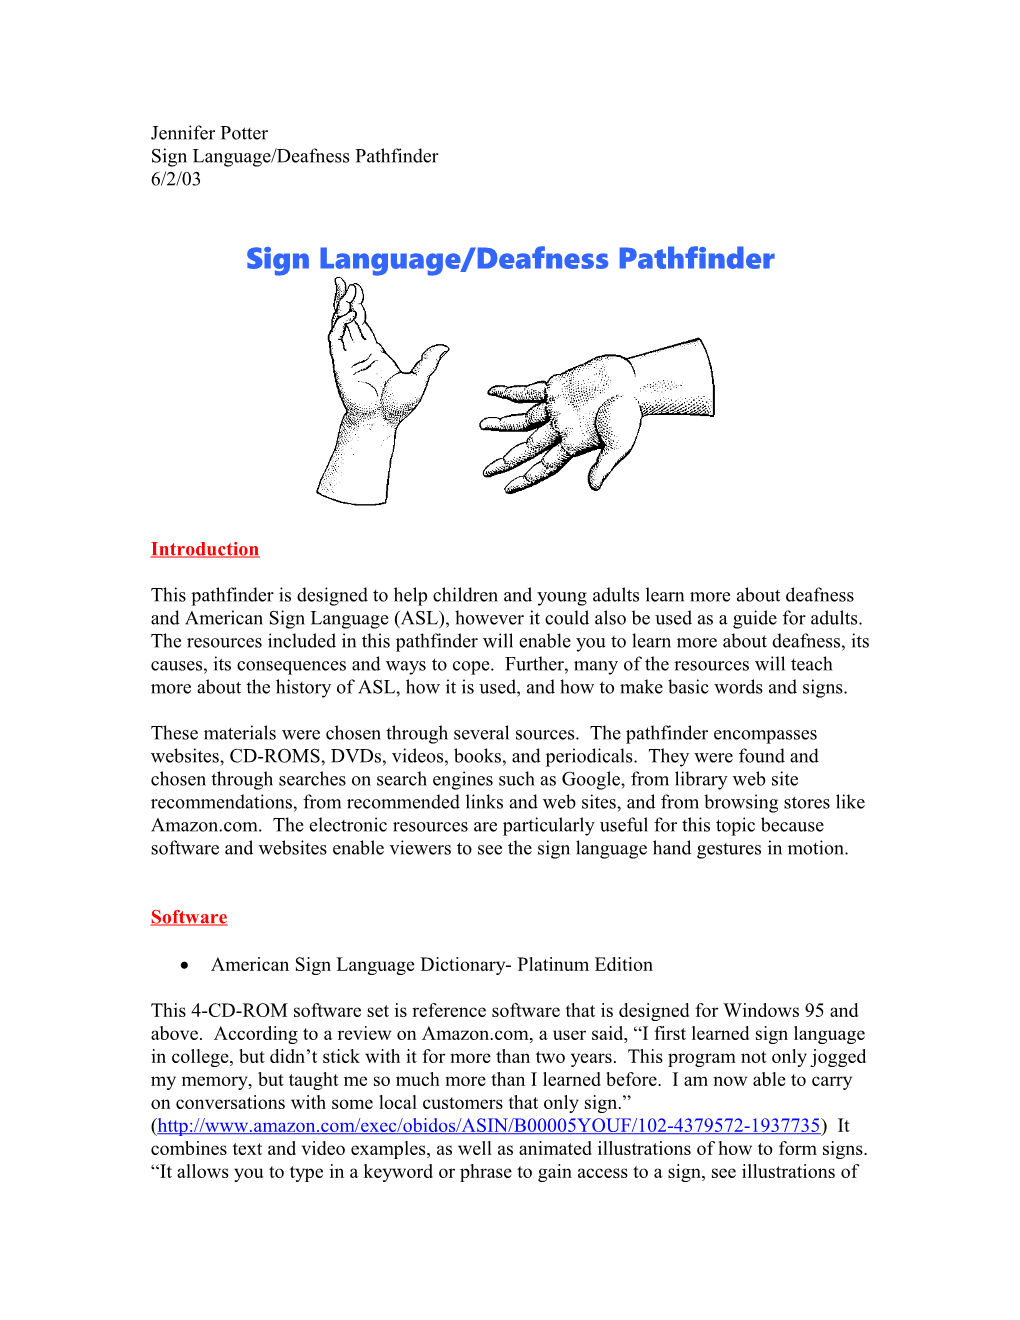 Sign Language/Deafness Pathfinder